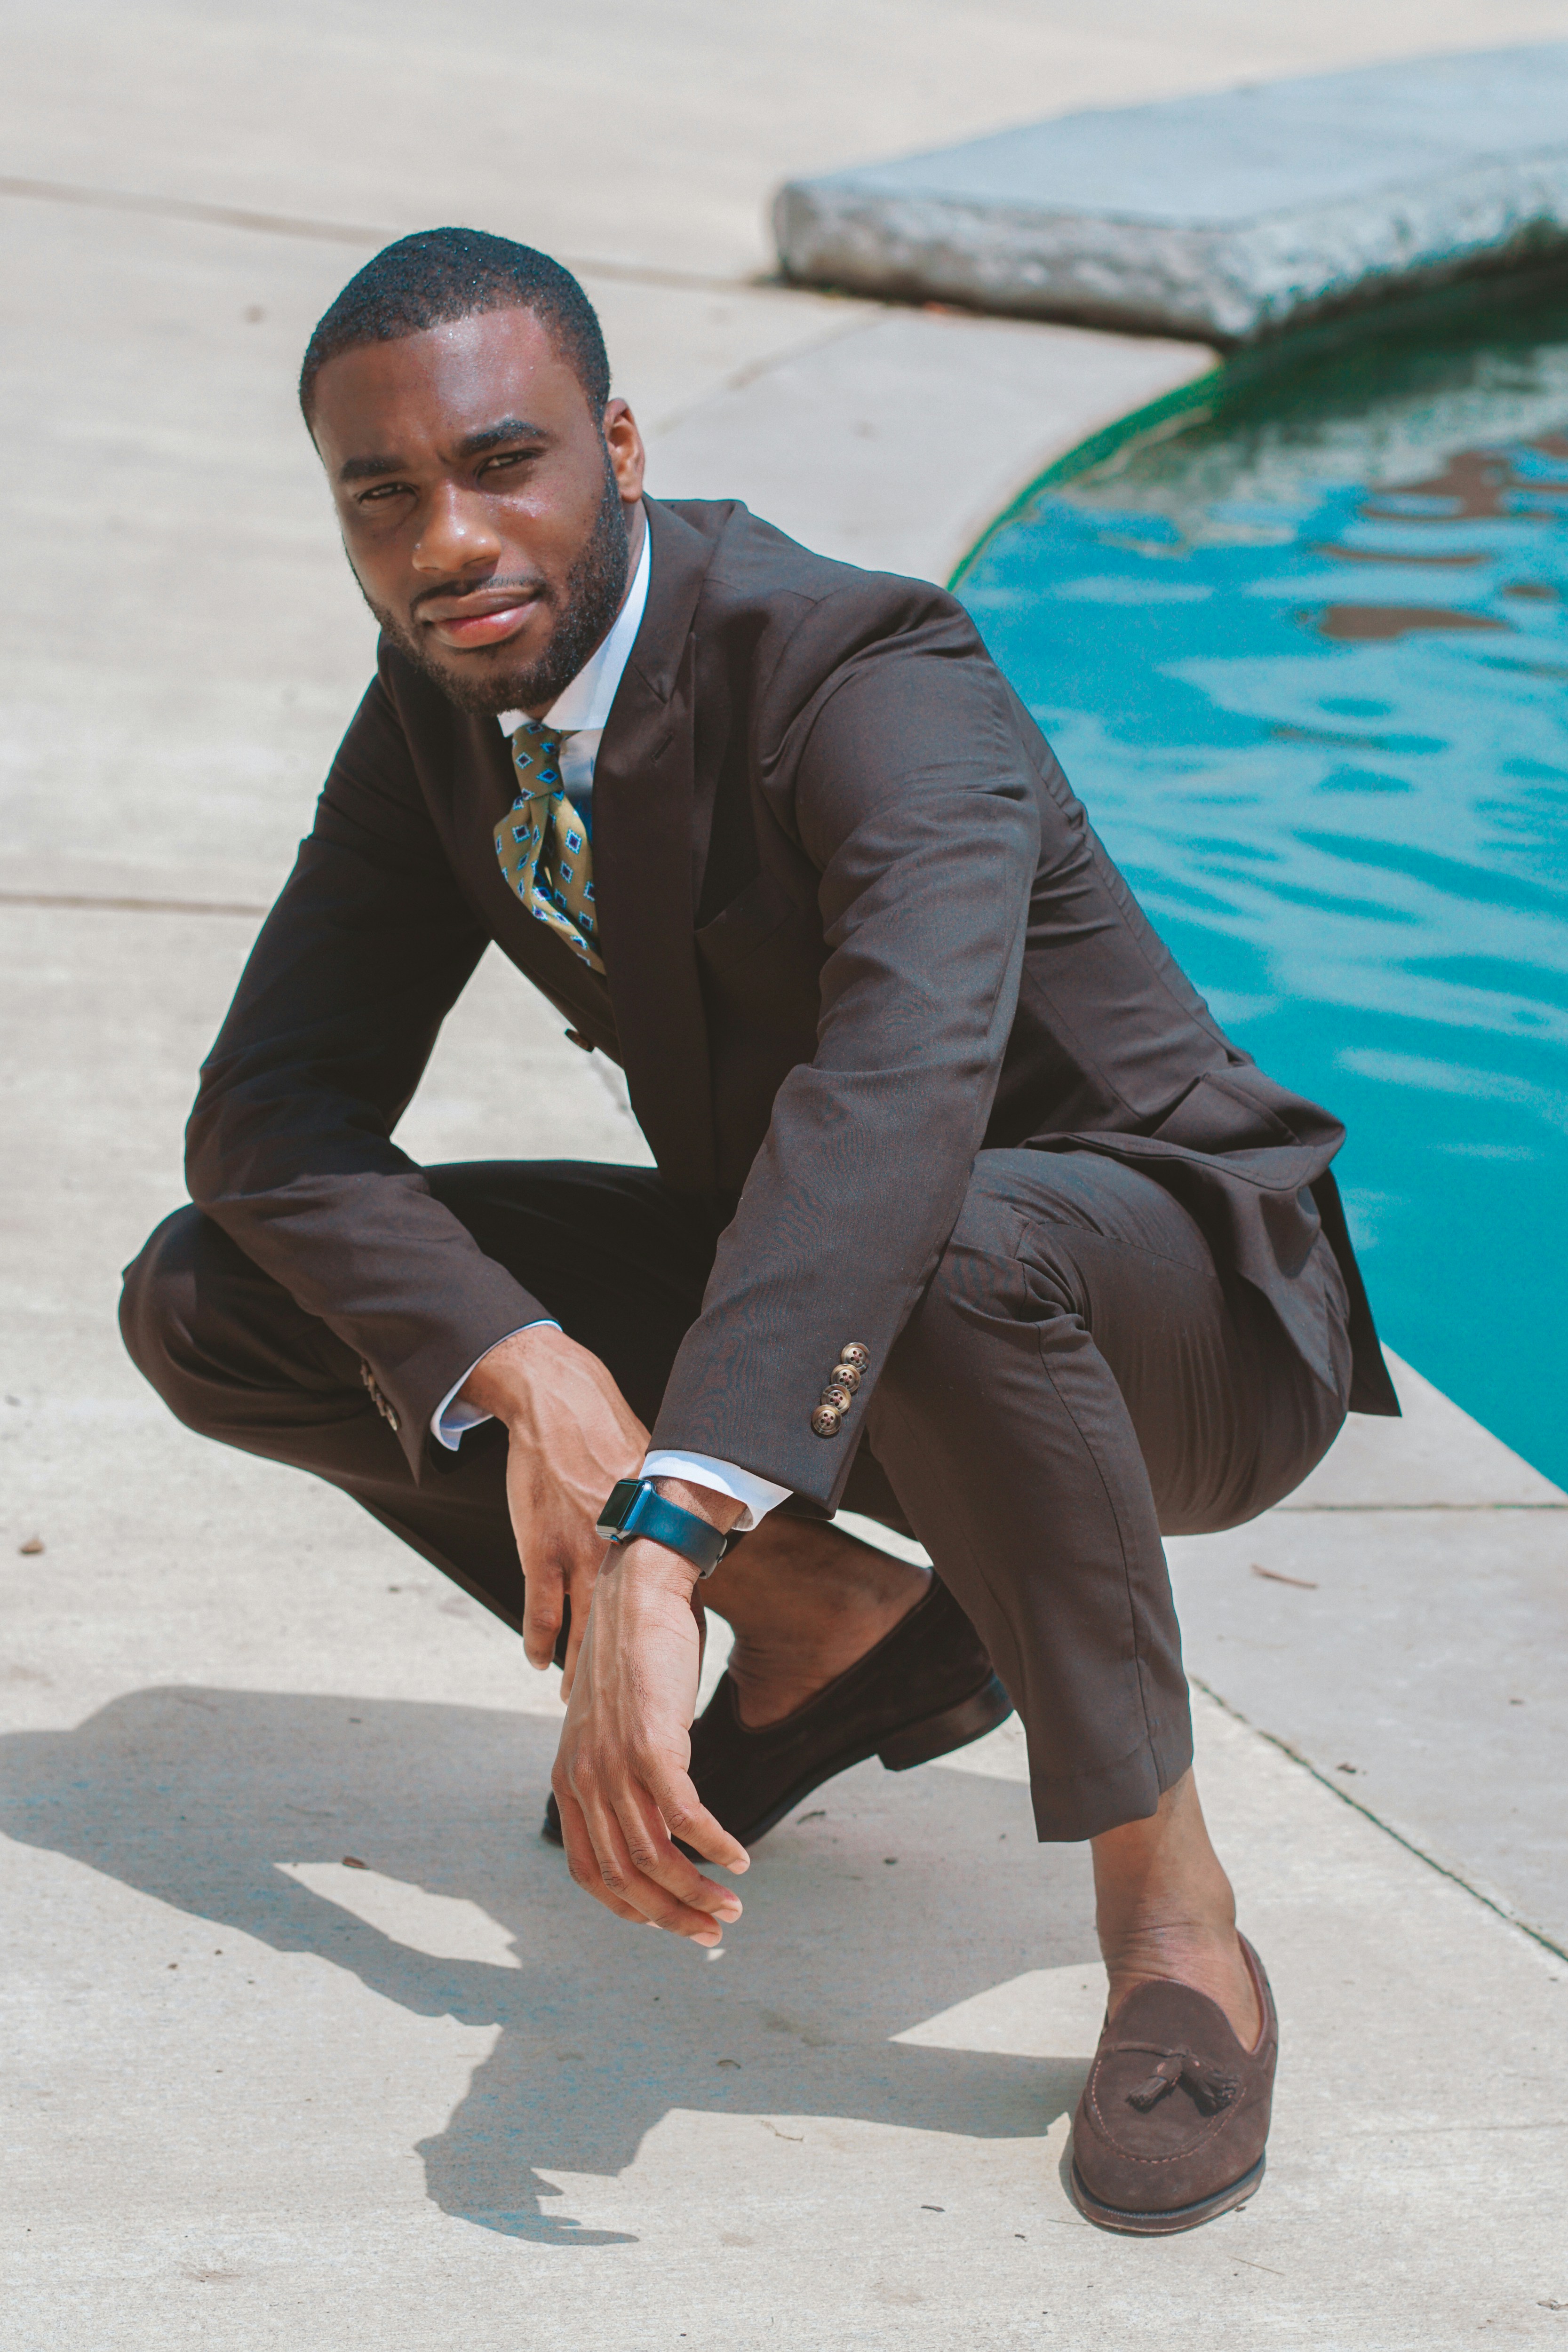 750+ Handsome Black Man Pictures Download Free Images on Unsplash picture